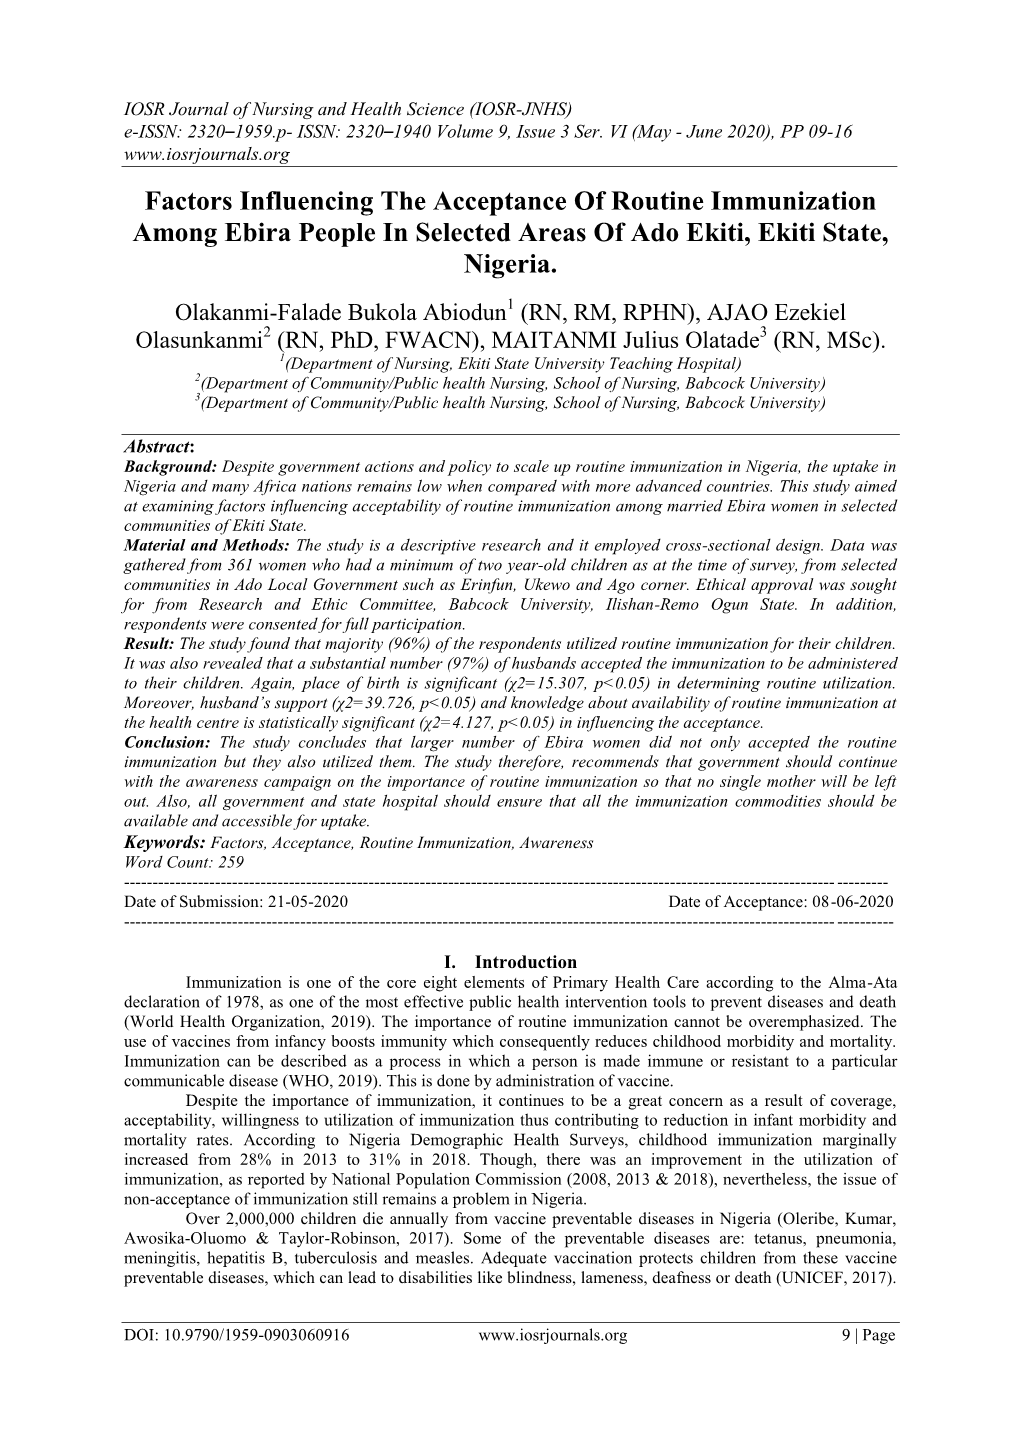 Factors Influencing the Acceptance of Routine Immunization Among Ebira People in Selected Areas of Ado Ekiti, Ekiti State, Nigeria